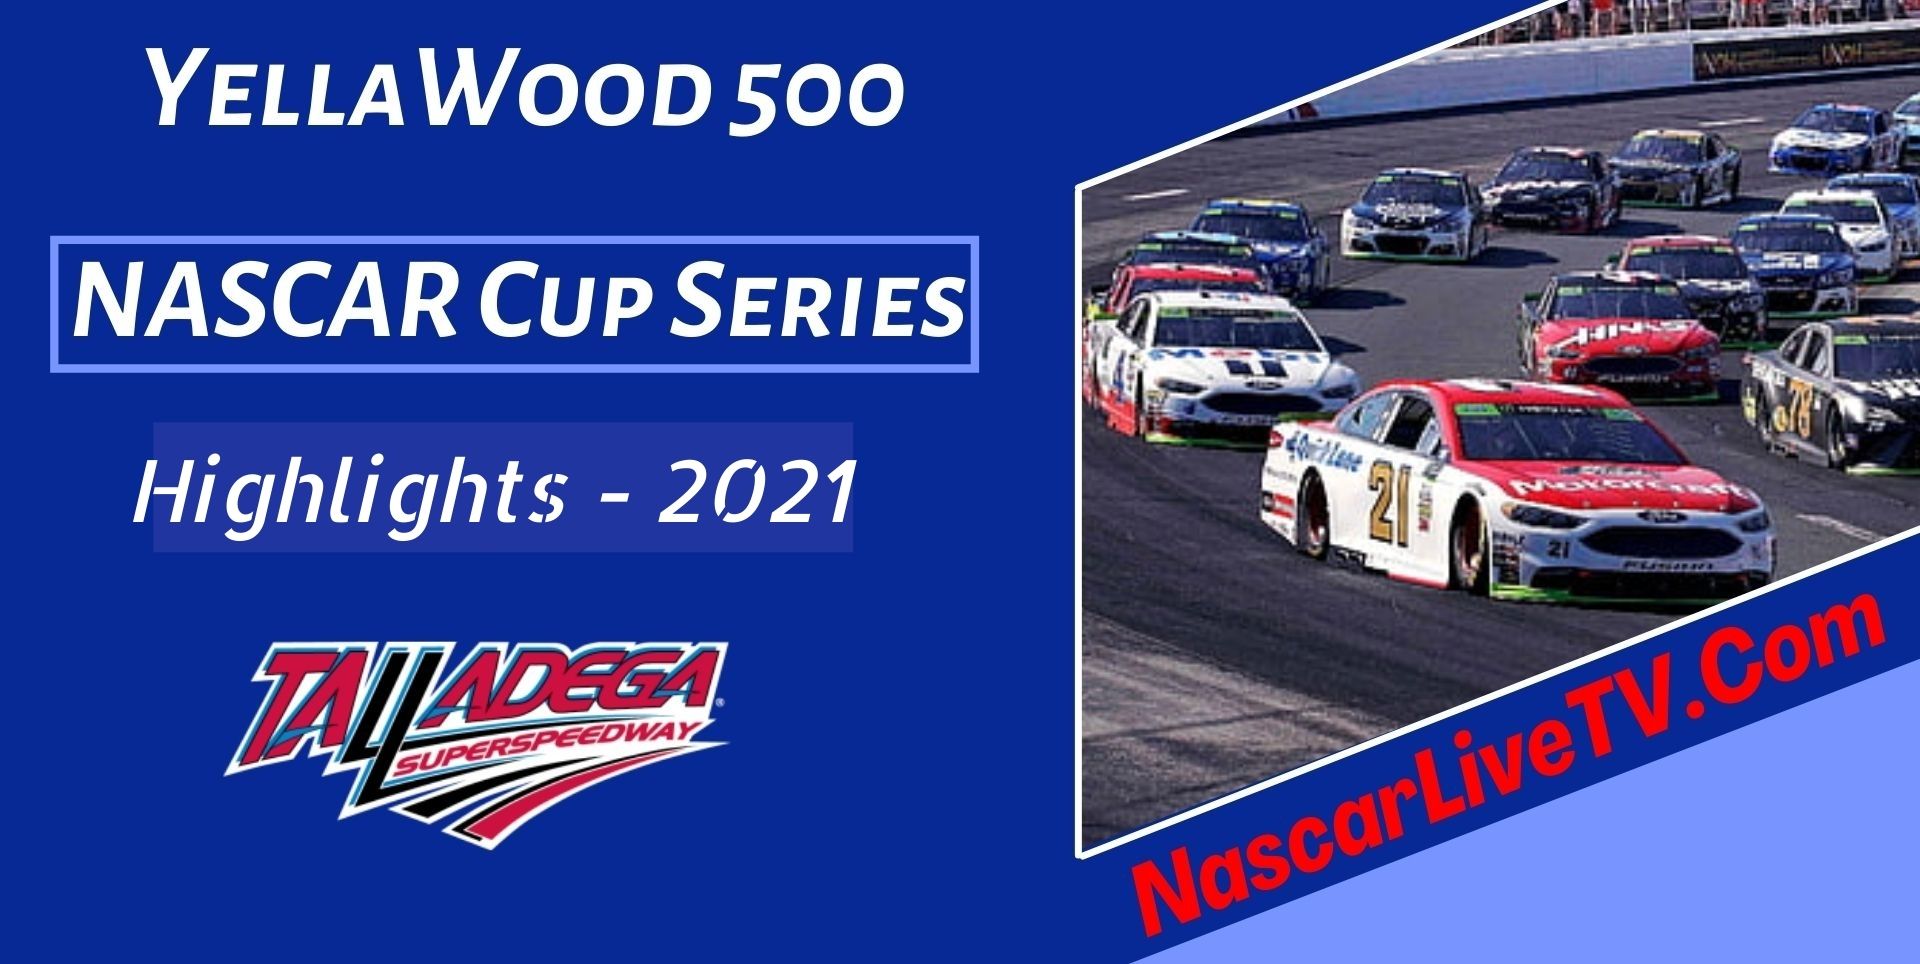 YELLAWOOD 500 Highlights NASCAR Cup Series 2021